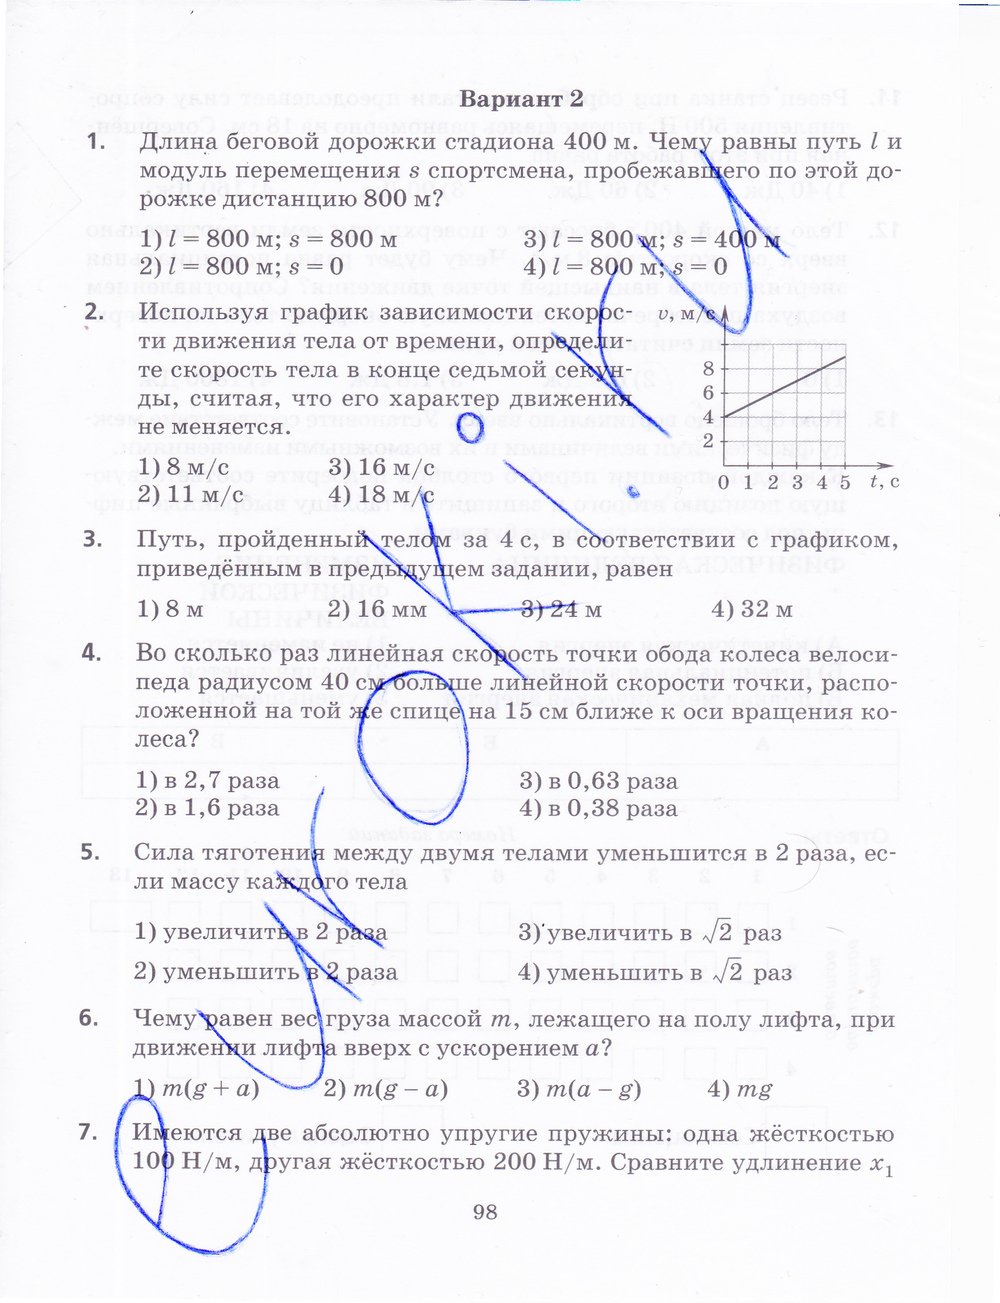 ГДЗ Физика Пурышева 9 класс Рабочая тетрадь Номер стр. 98